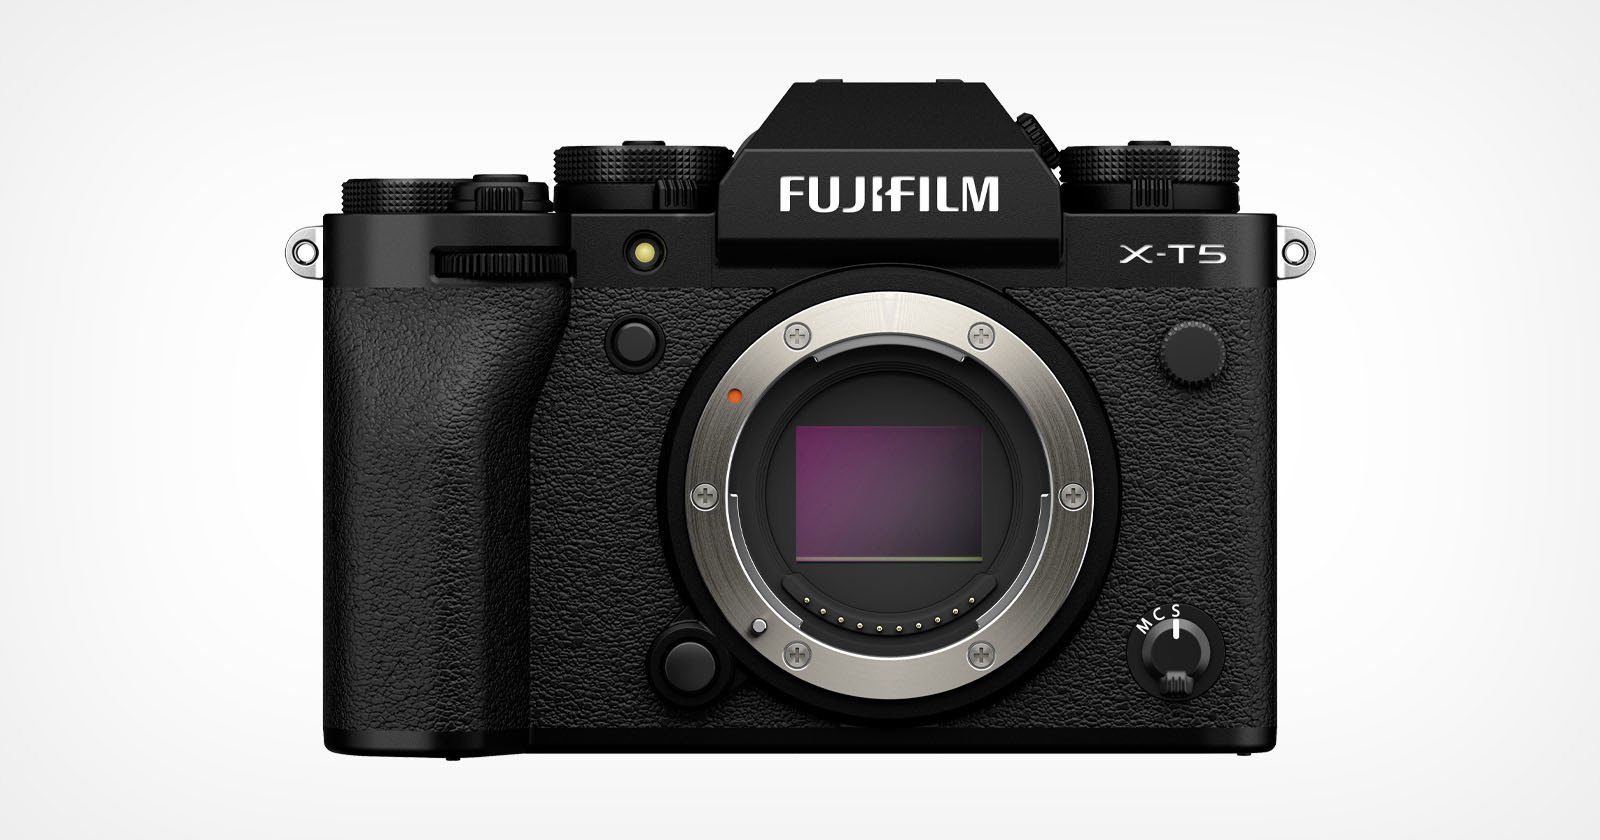 Fujifilm X-T5: 40.2MP, 6.2K Video, and Better Autofocus in a Smaller Body